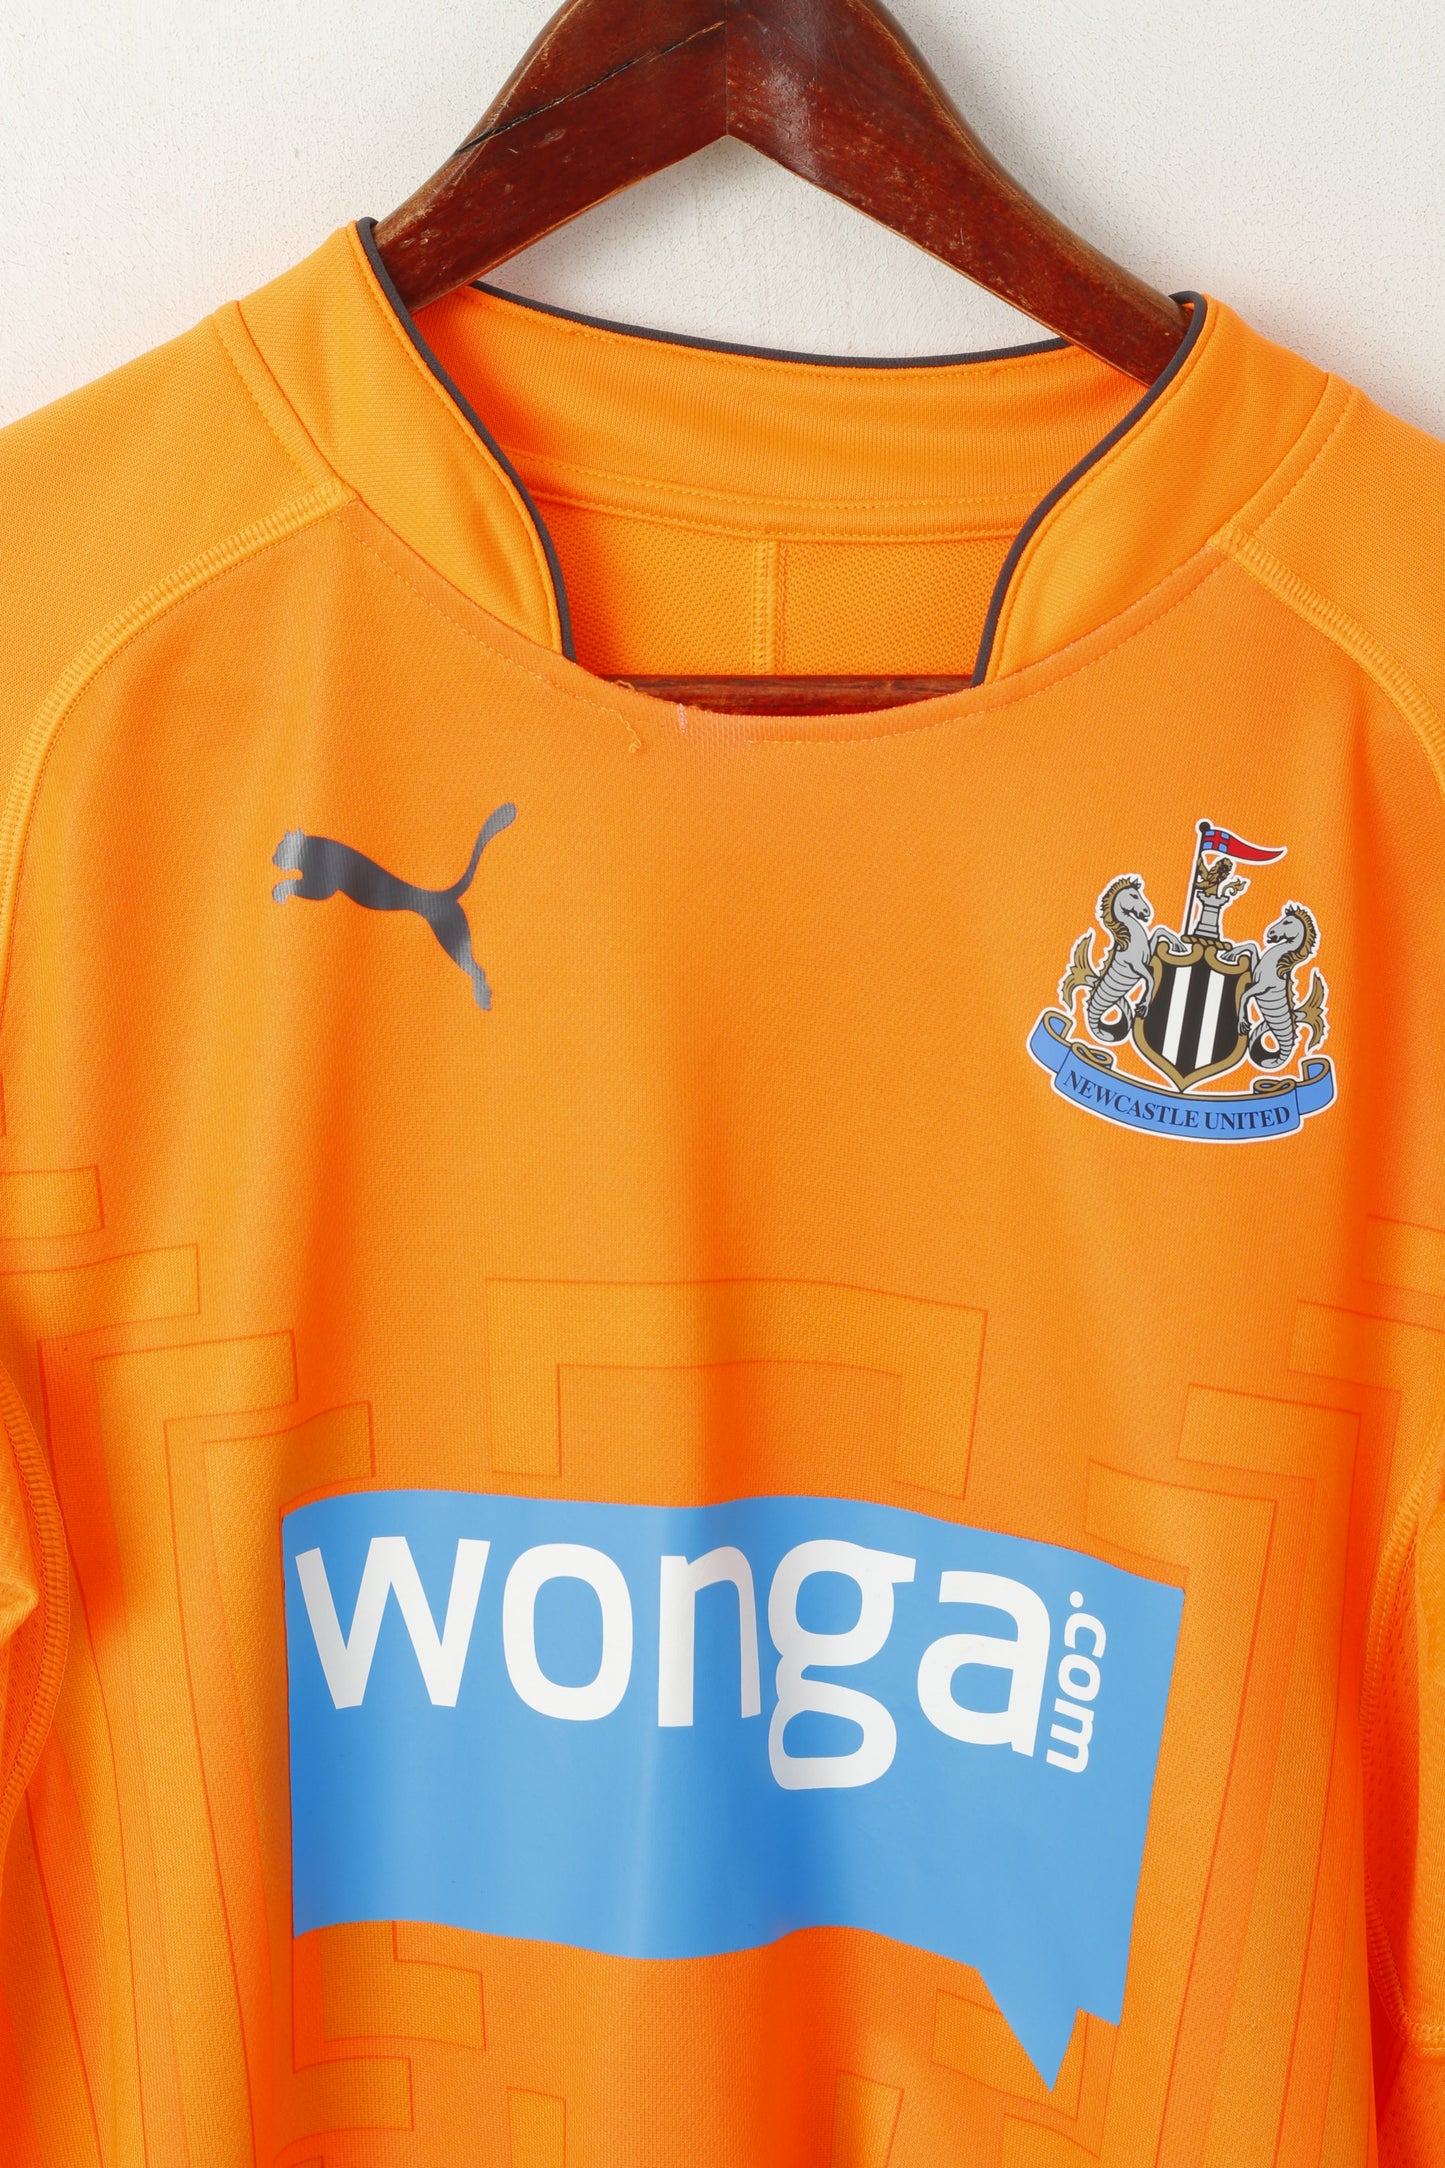 Puma Newcastle United Men S Shirt Orange Neon Football #1 Anderson Jersey Top